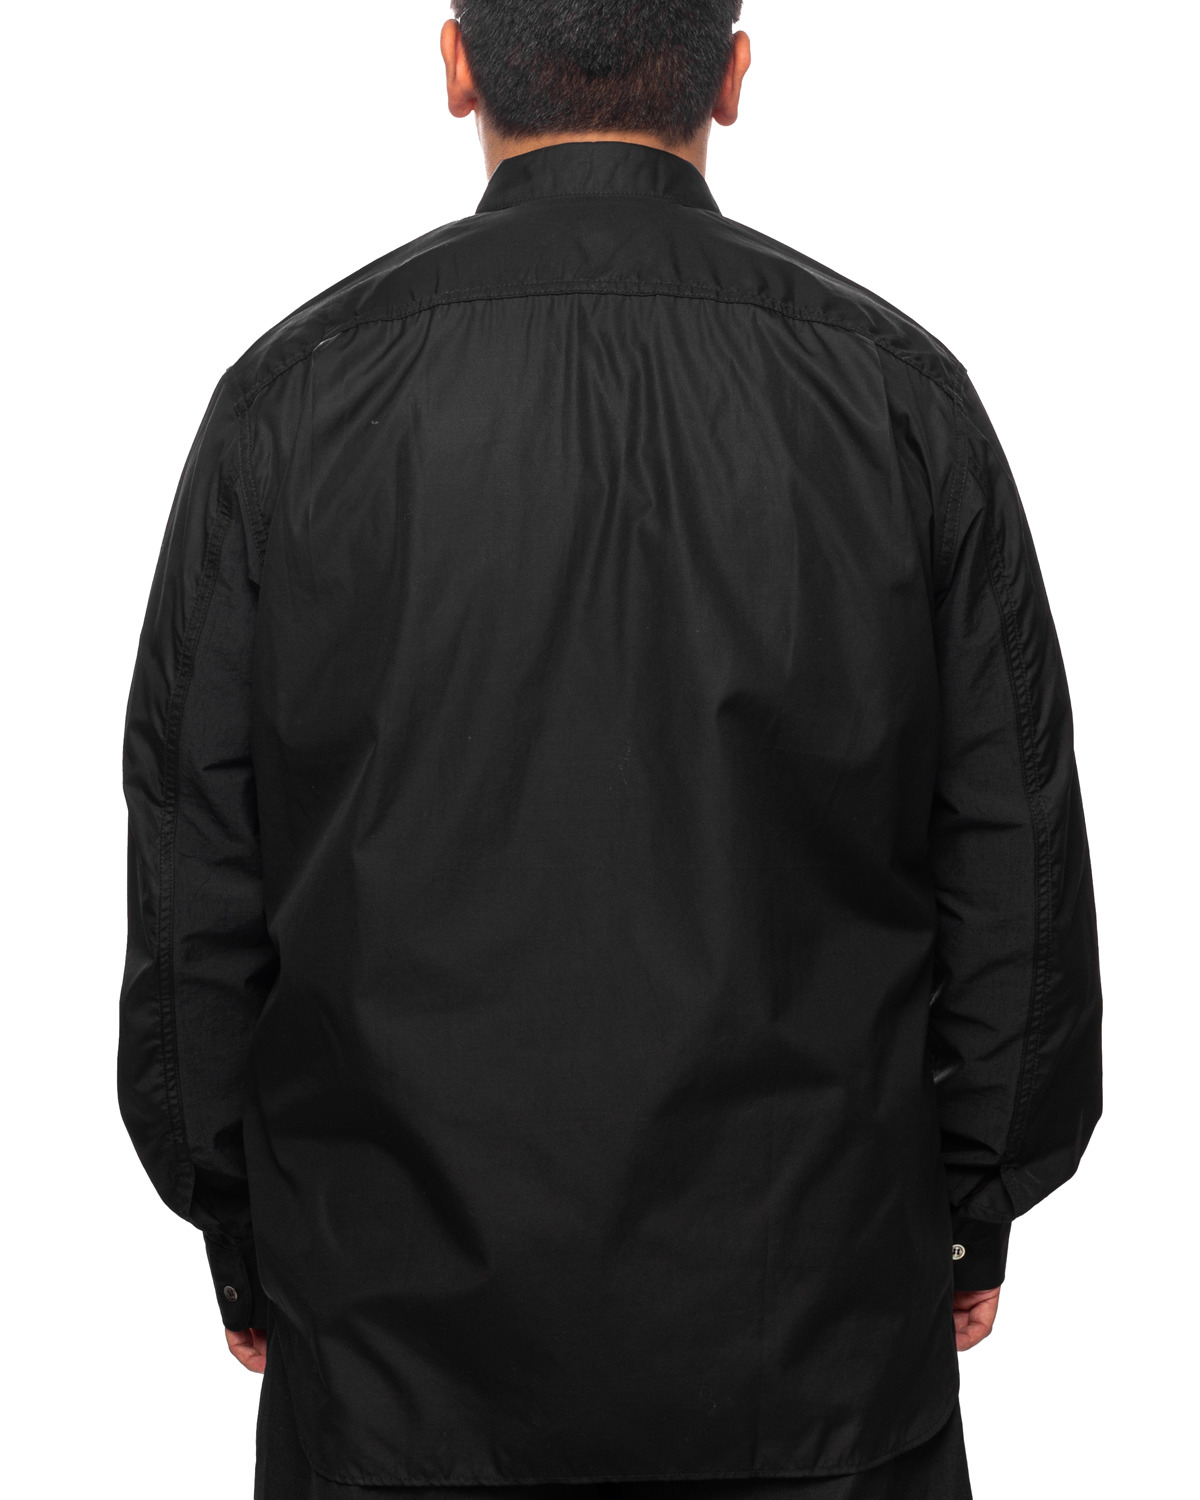 Men's Shirt Black Multi Fabric Mix HL-B001-051 - 3